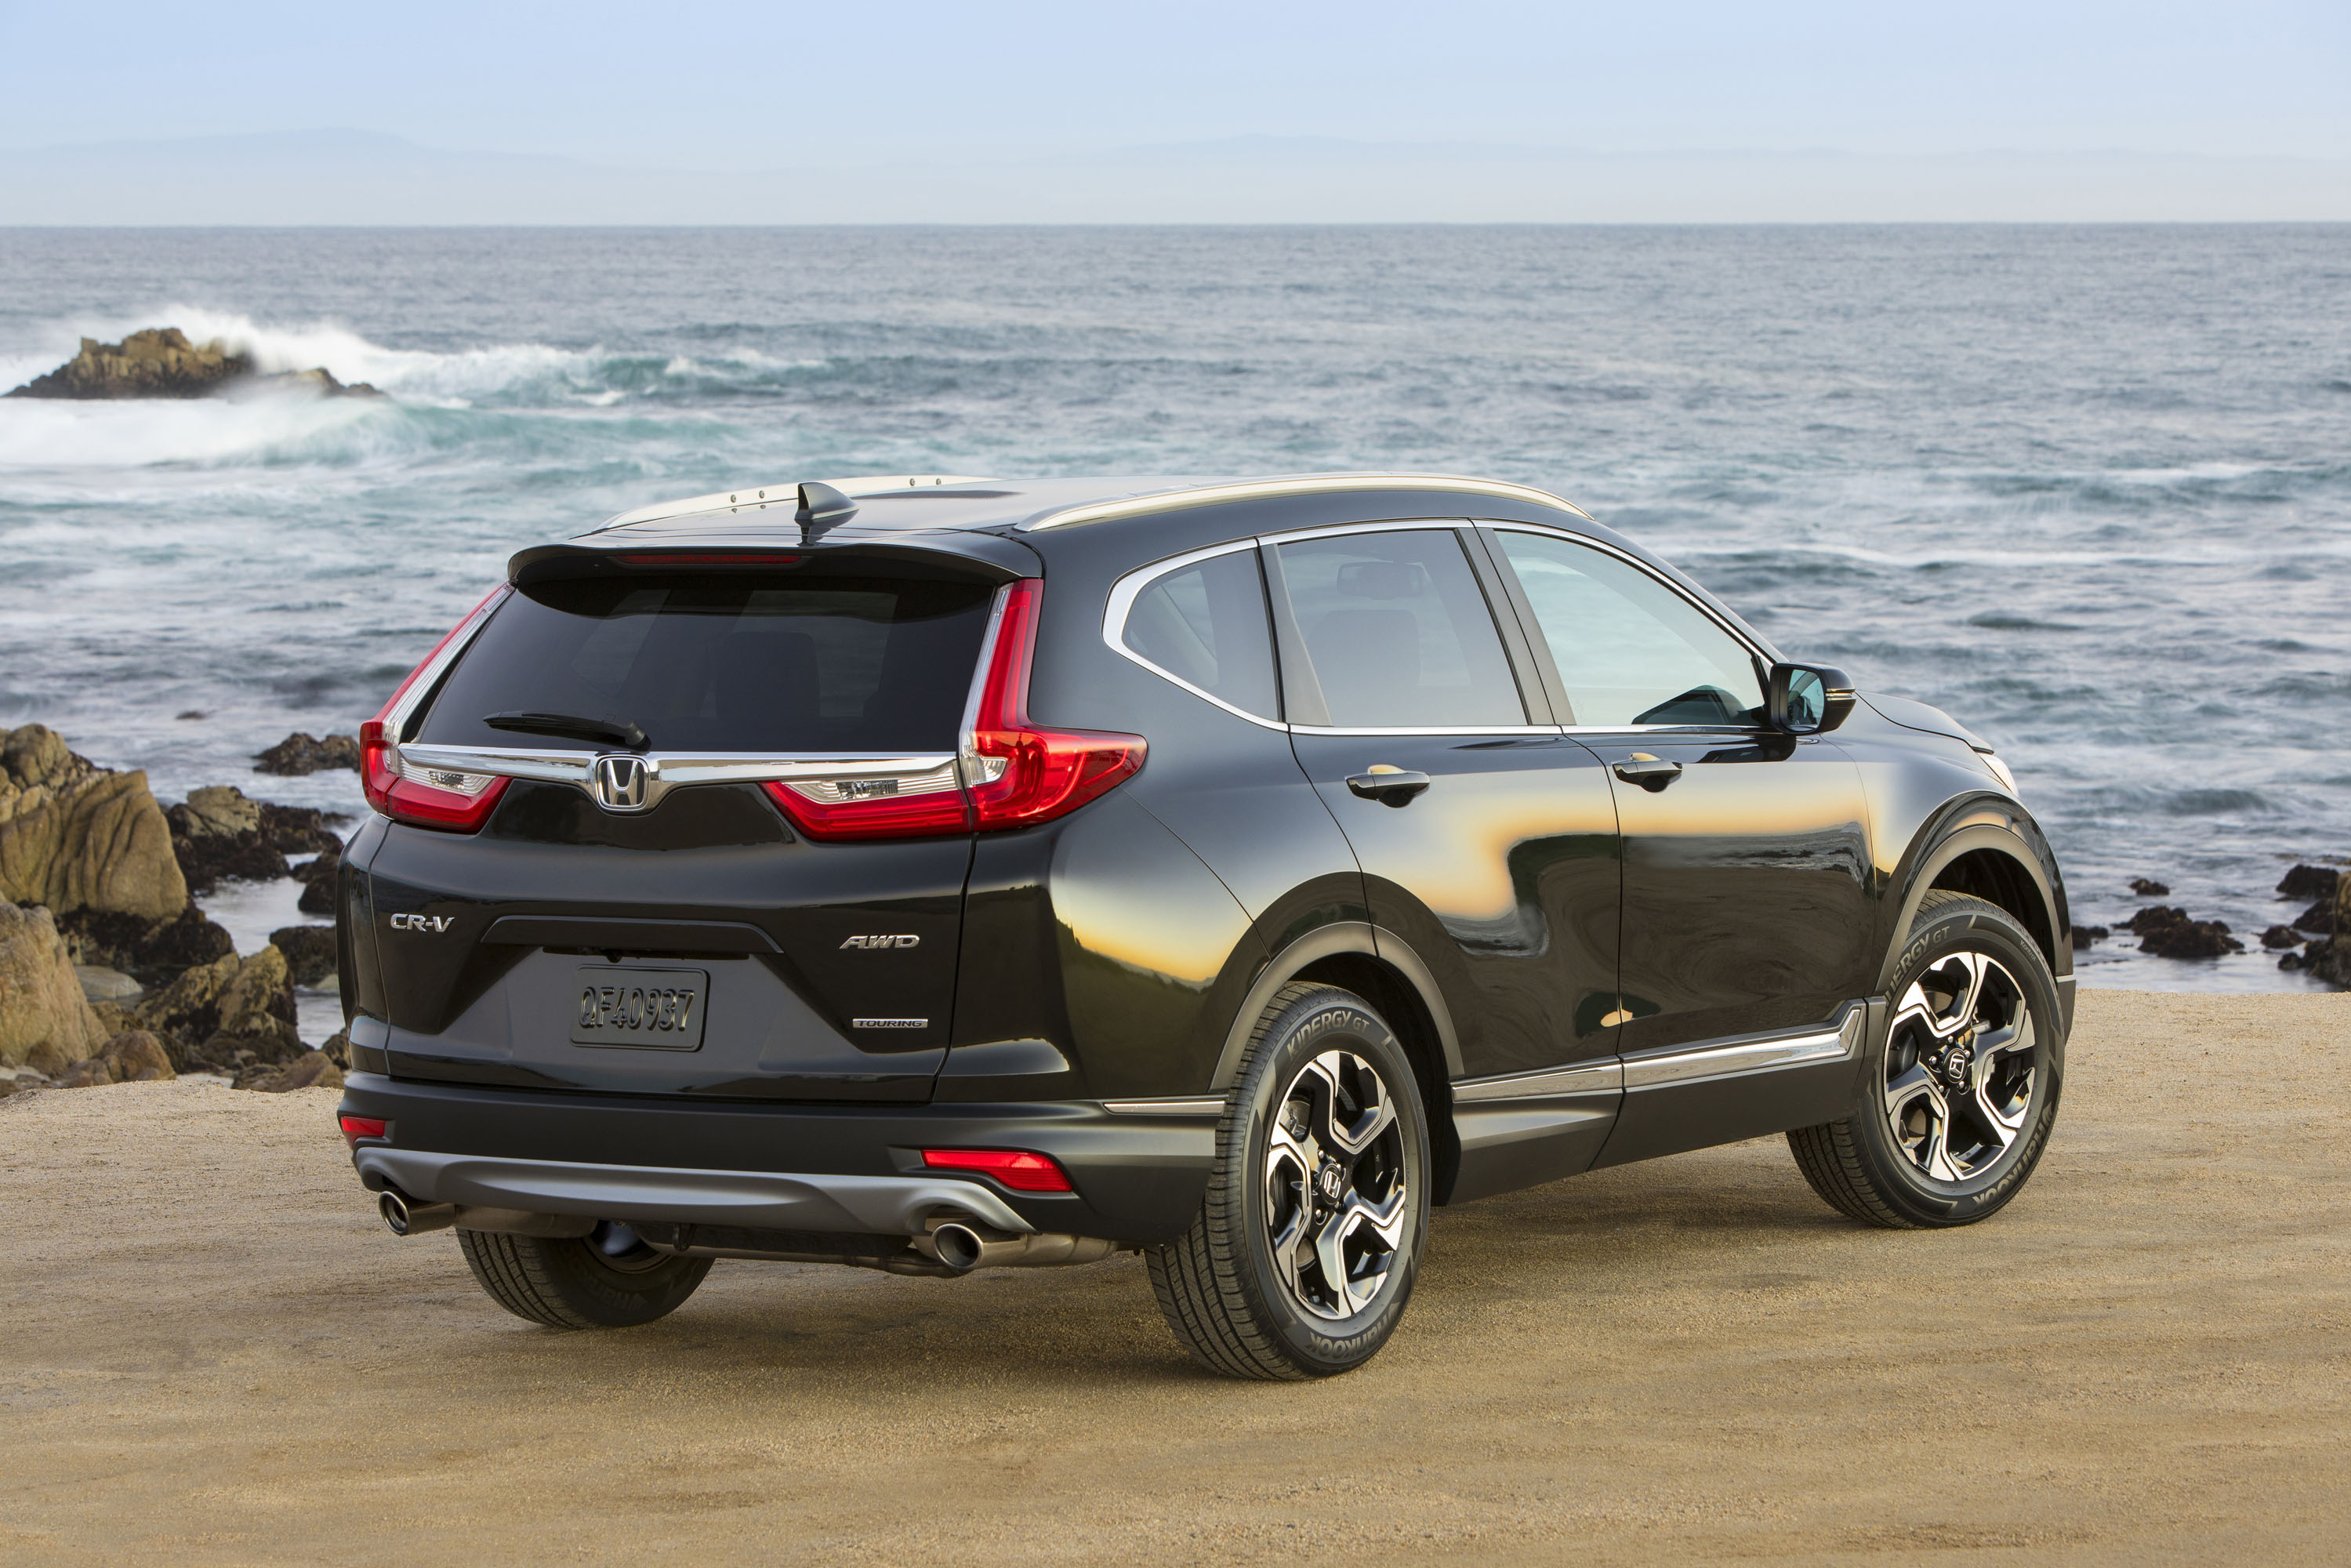 119K 2019 Honda CR V crossover SUVs recalled to fix airbags